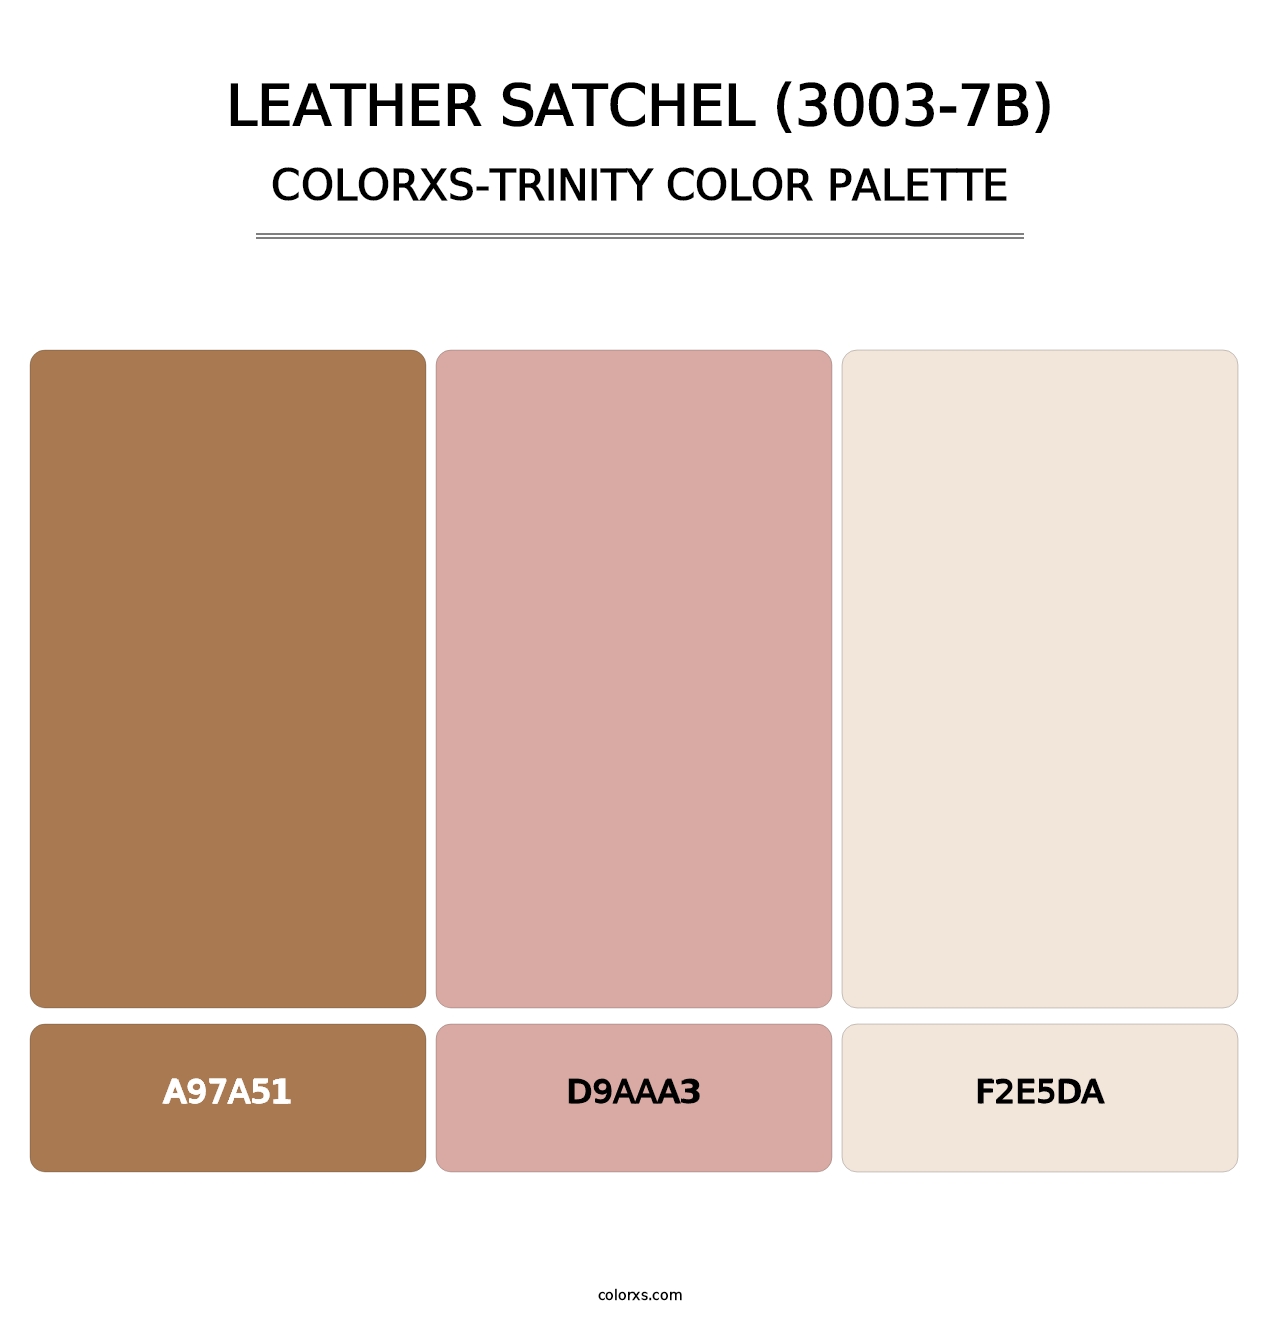 Leather Satchel (3003-7B) - Colorxs Trinity Palette